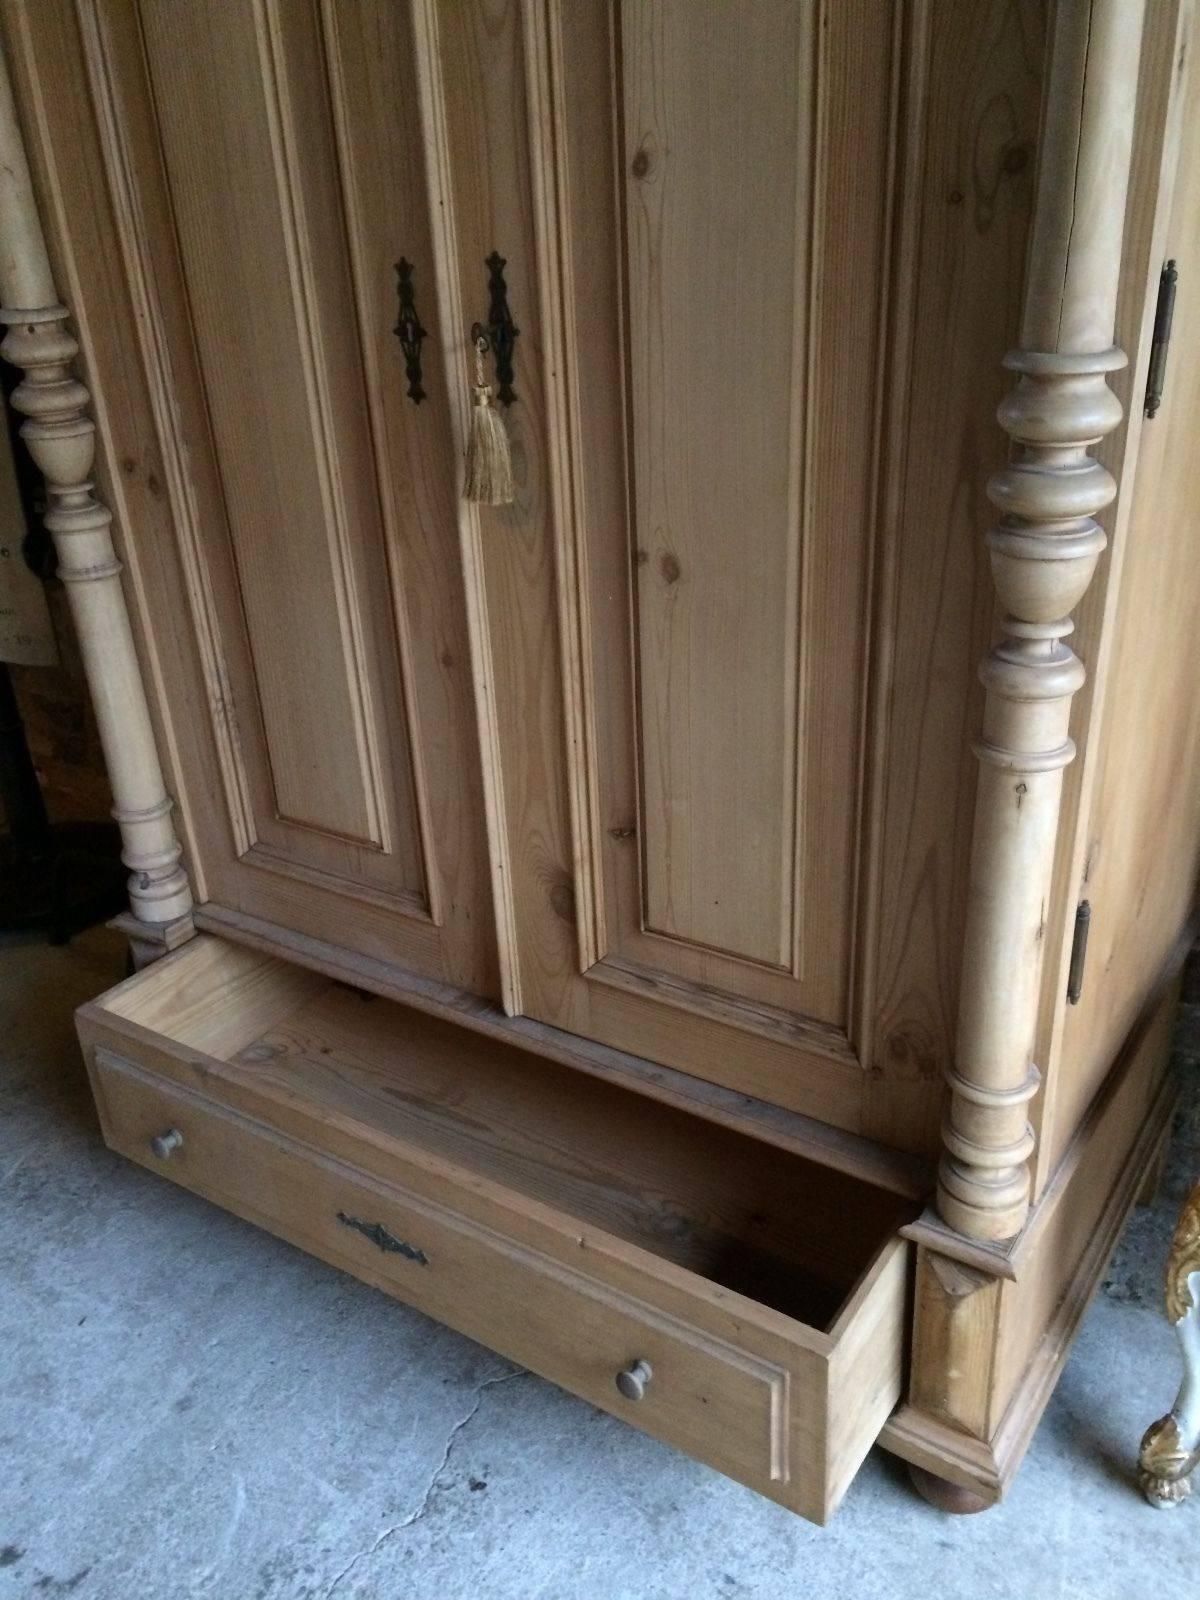 vintage pine armoire